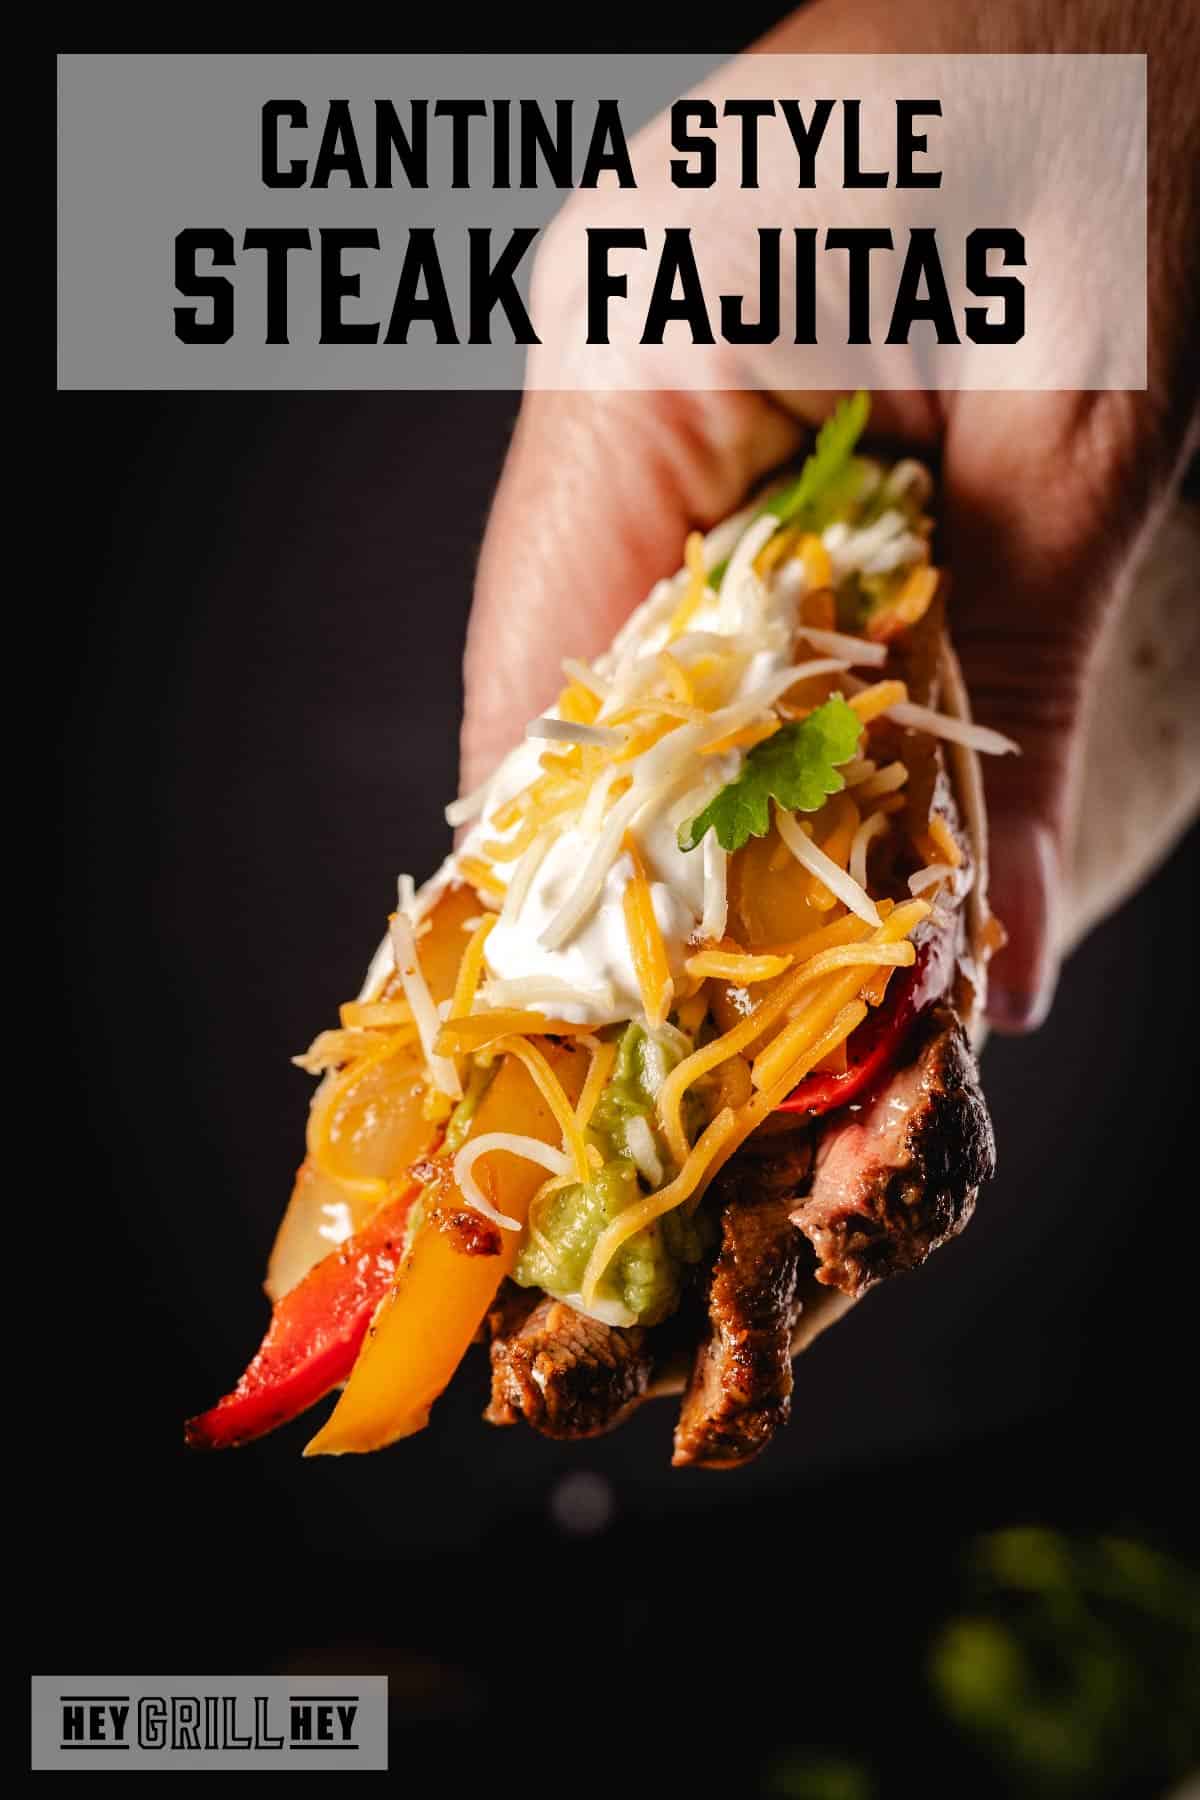 Hand holding up a loaded fajita. Text reads "Cantina Steak Fajitas".